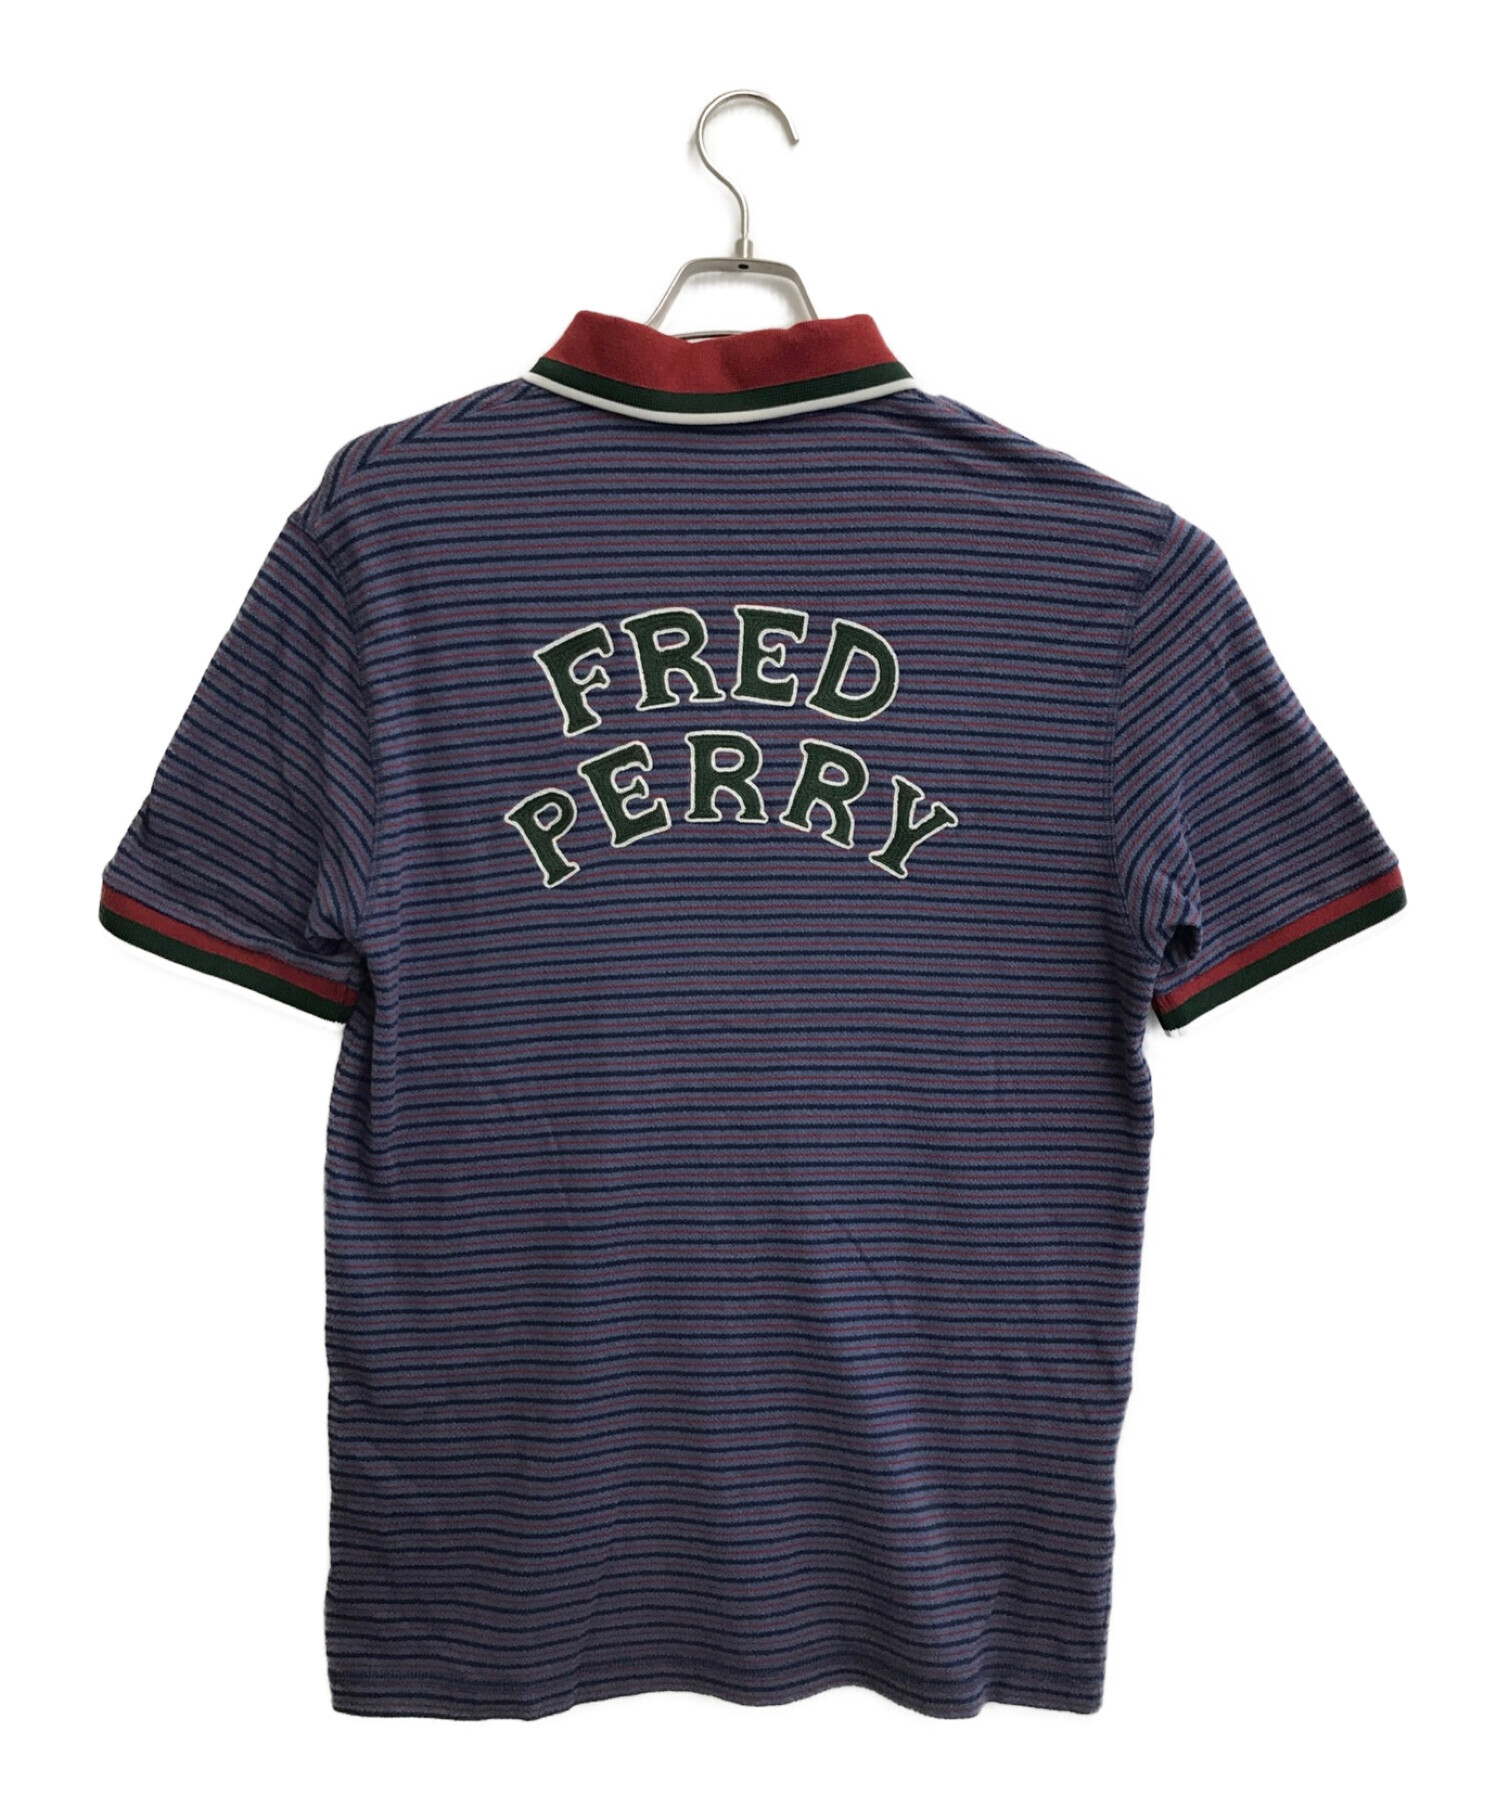 FRED PERRY (フレッドペリー) nicholas daley (ニコラス デイリー) ポロシャツ ネイビー×レッド サイズ:M